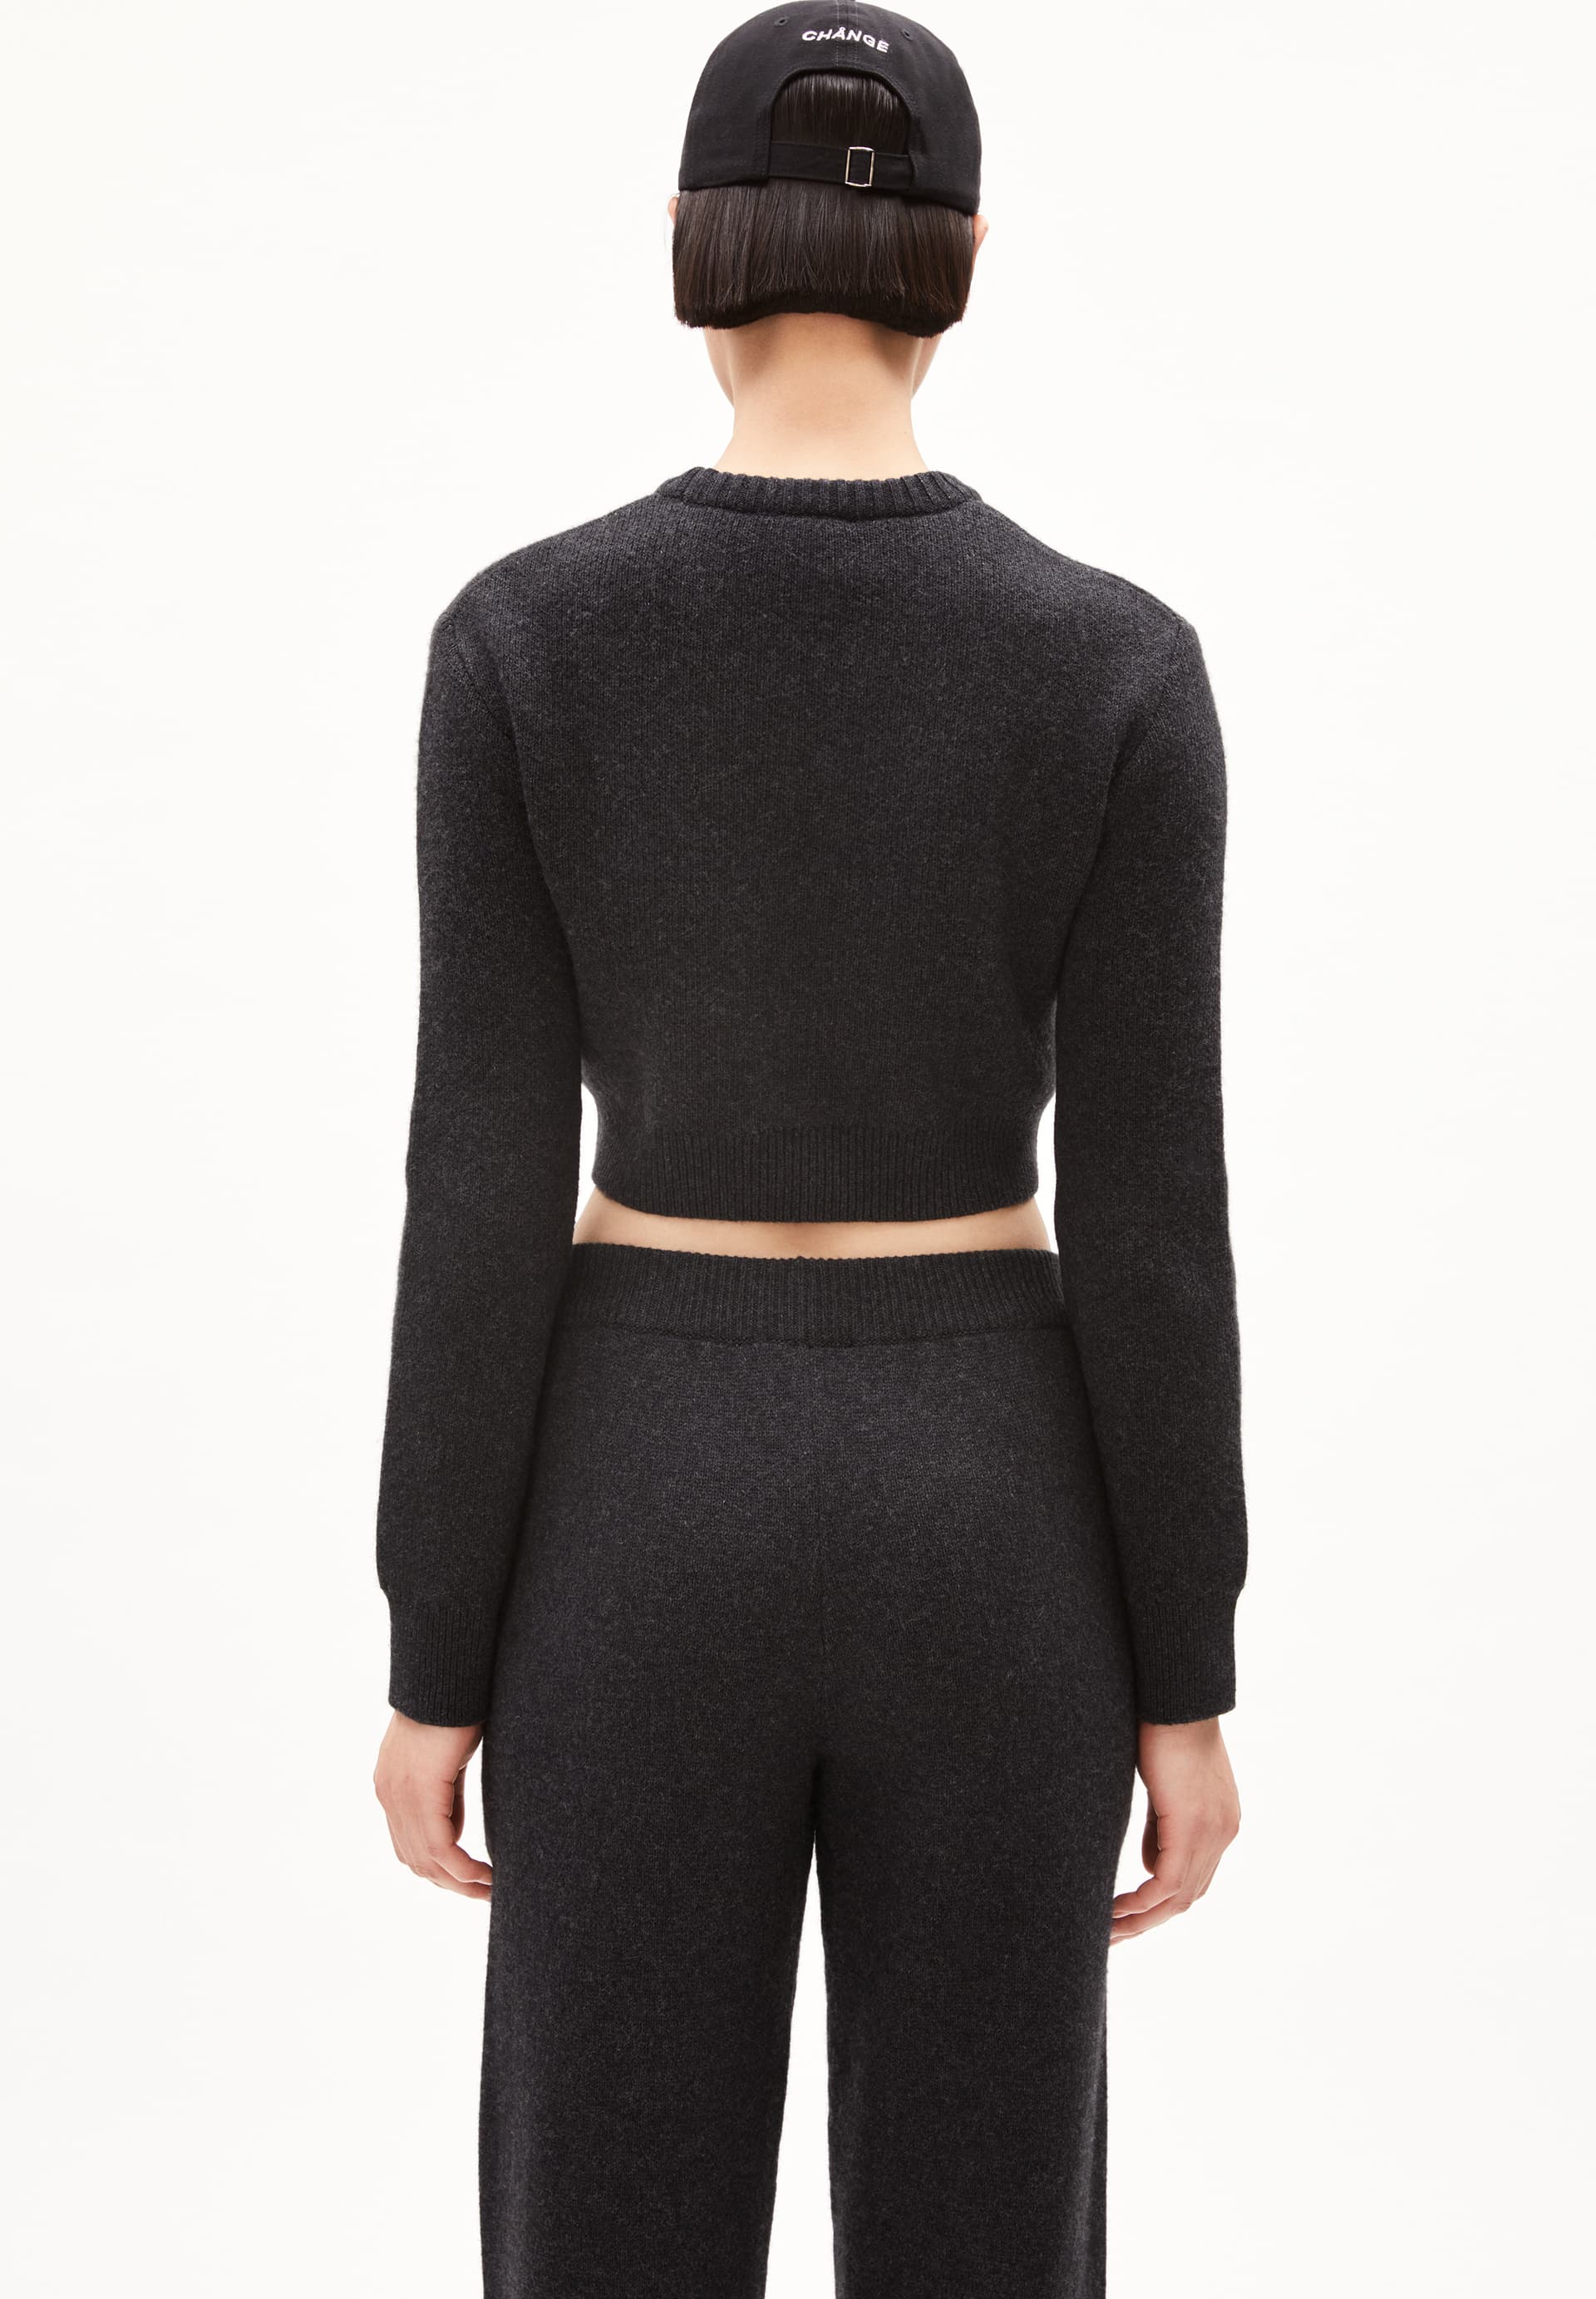 MEJAA Sweater Slim Fit made of Organic Wool Mix